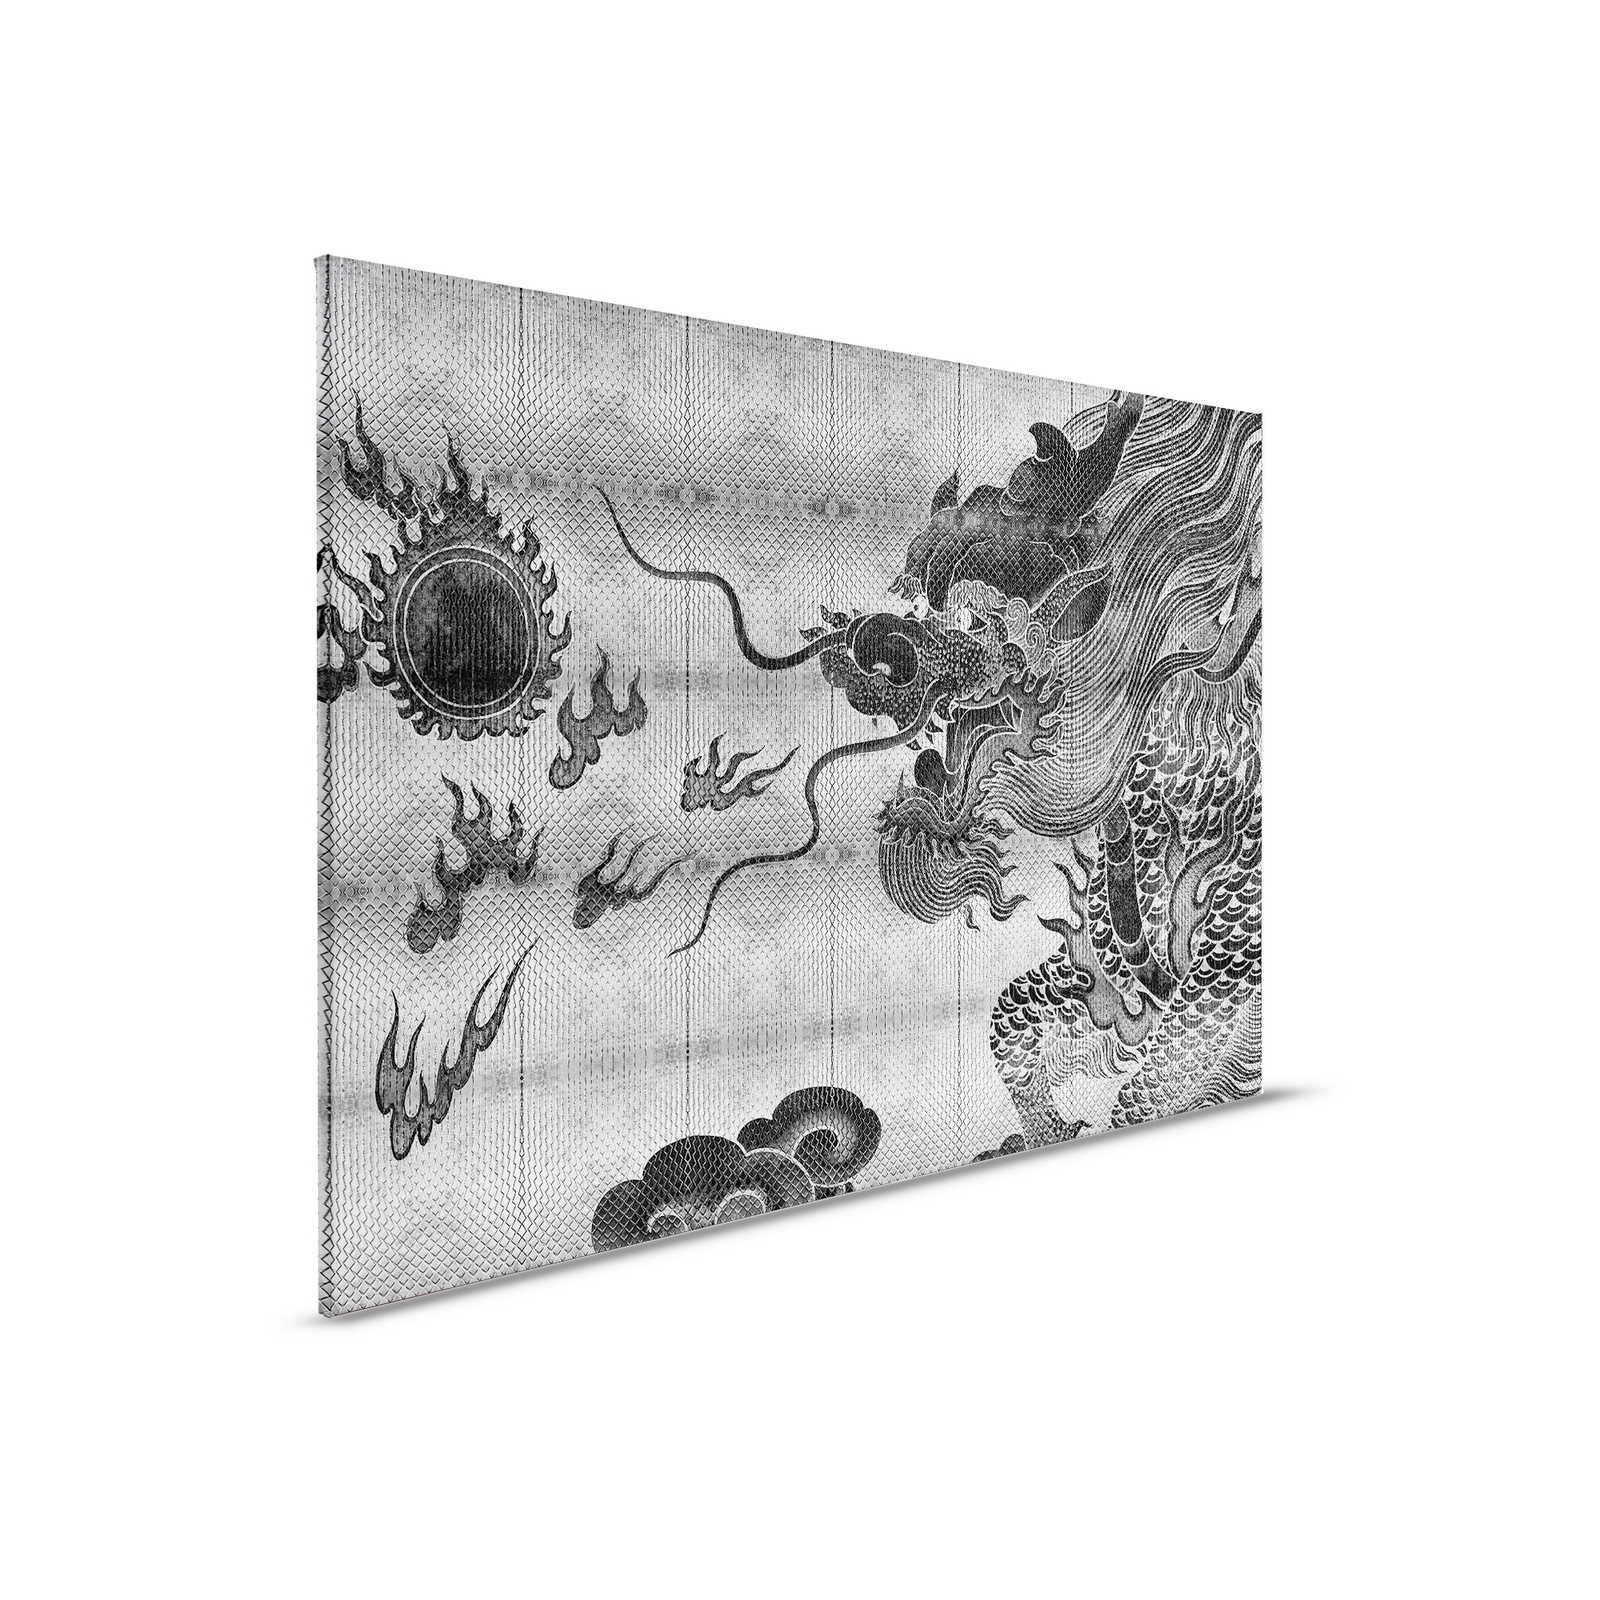 Shenzen 3 - Pintura sobre lienzo Dragón Plateado Metalizado Estilo Asiático - 0.90 m x 0.60 m
